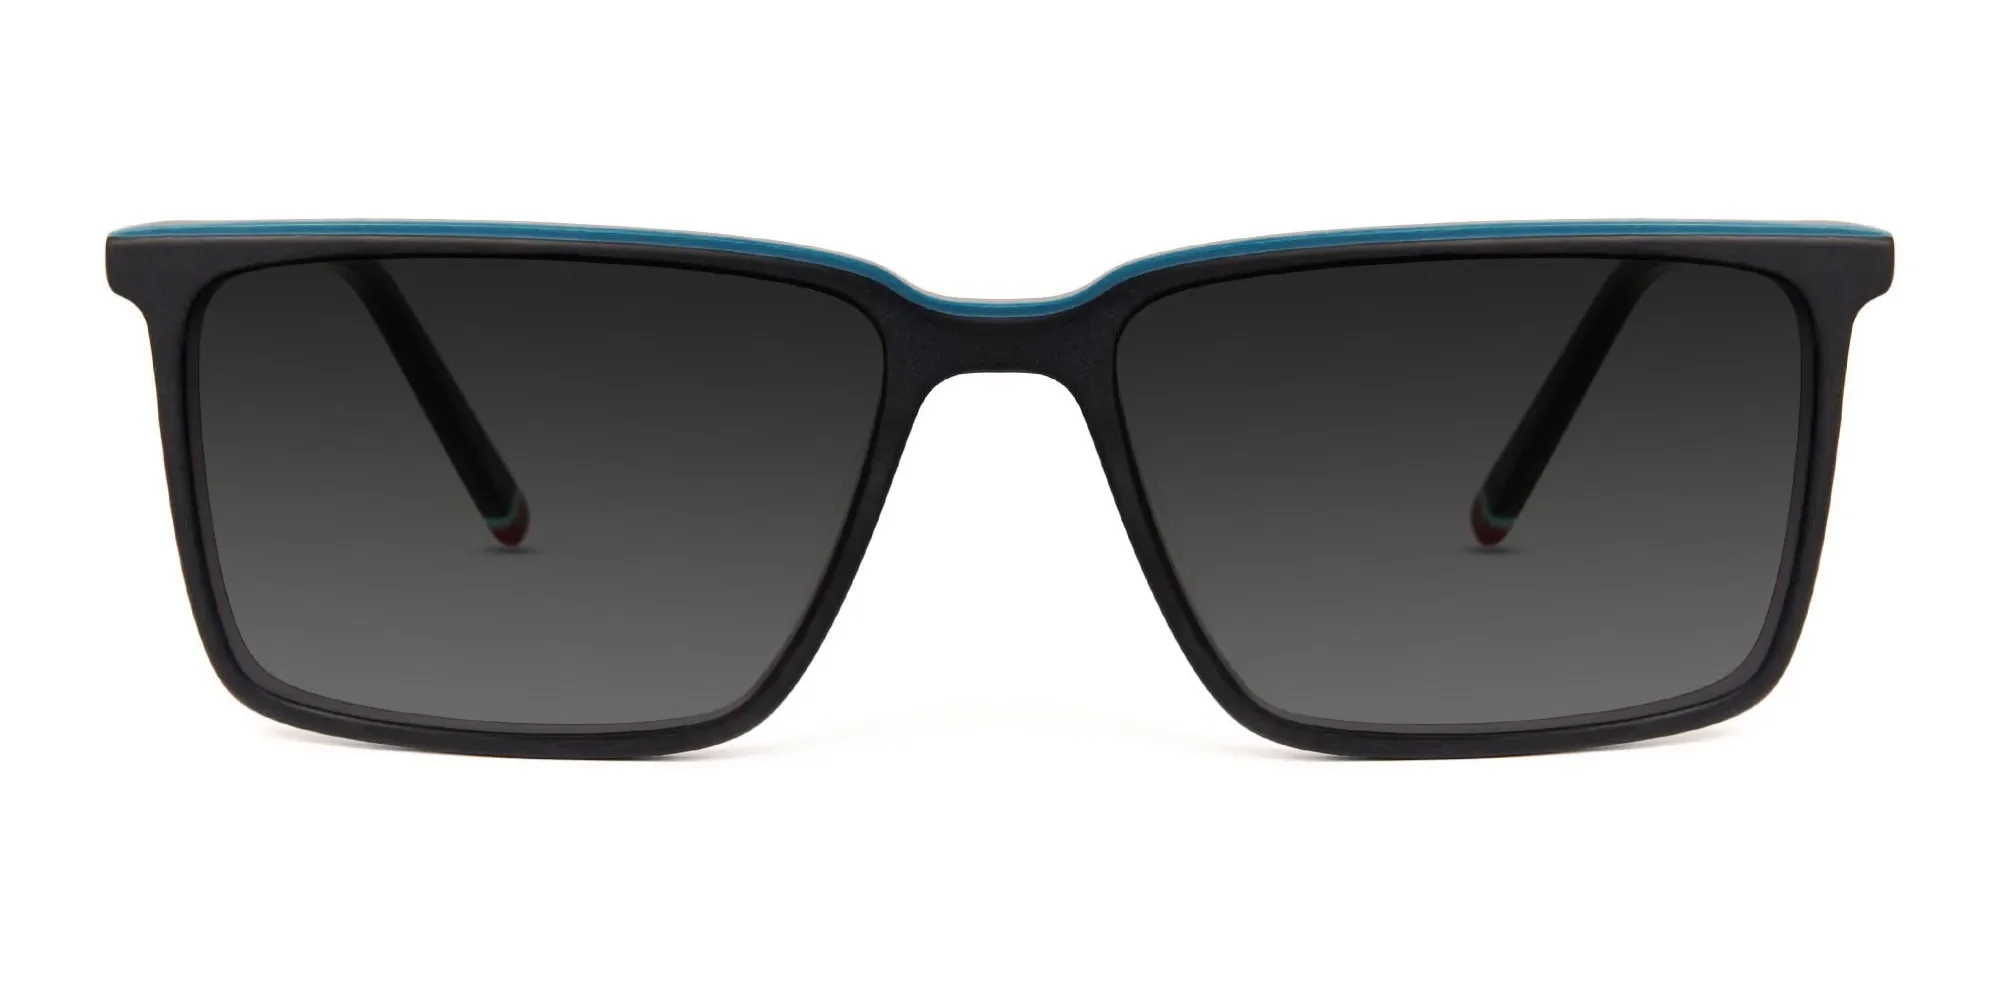 black-and-teal-rectangular-full-rim-grey-tinted-sunglasses-frames-2